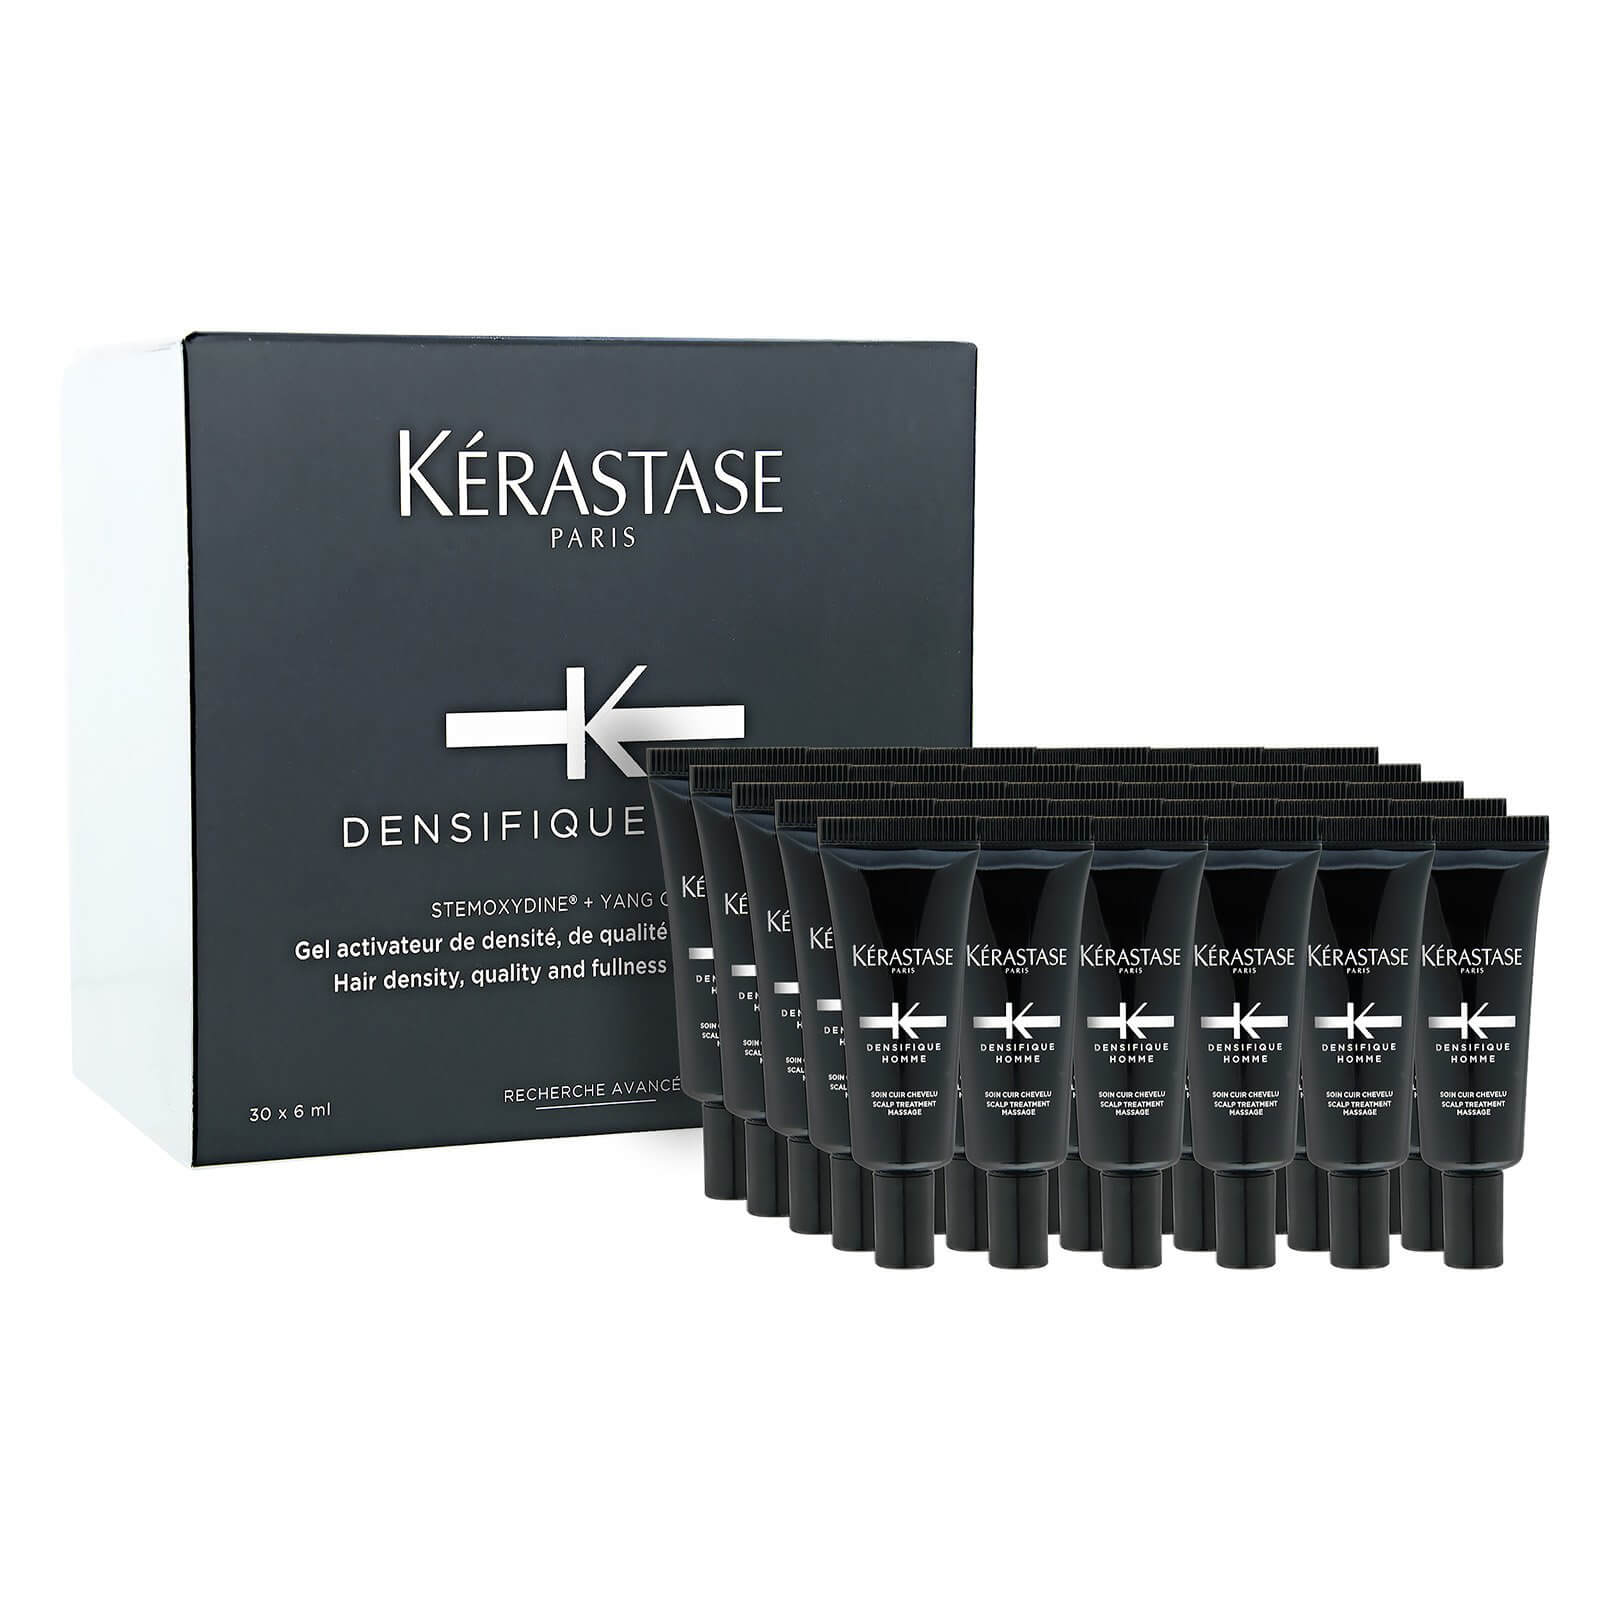 Densifique Homme Hair Density, Quality and Fullness Activator Program